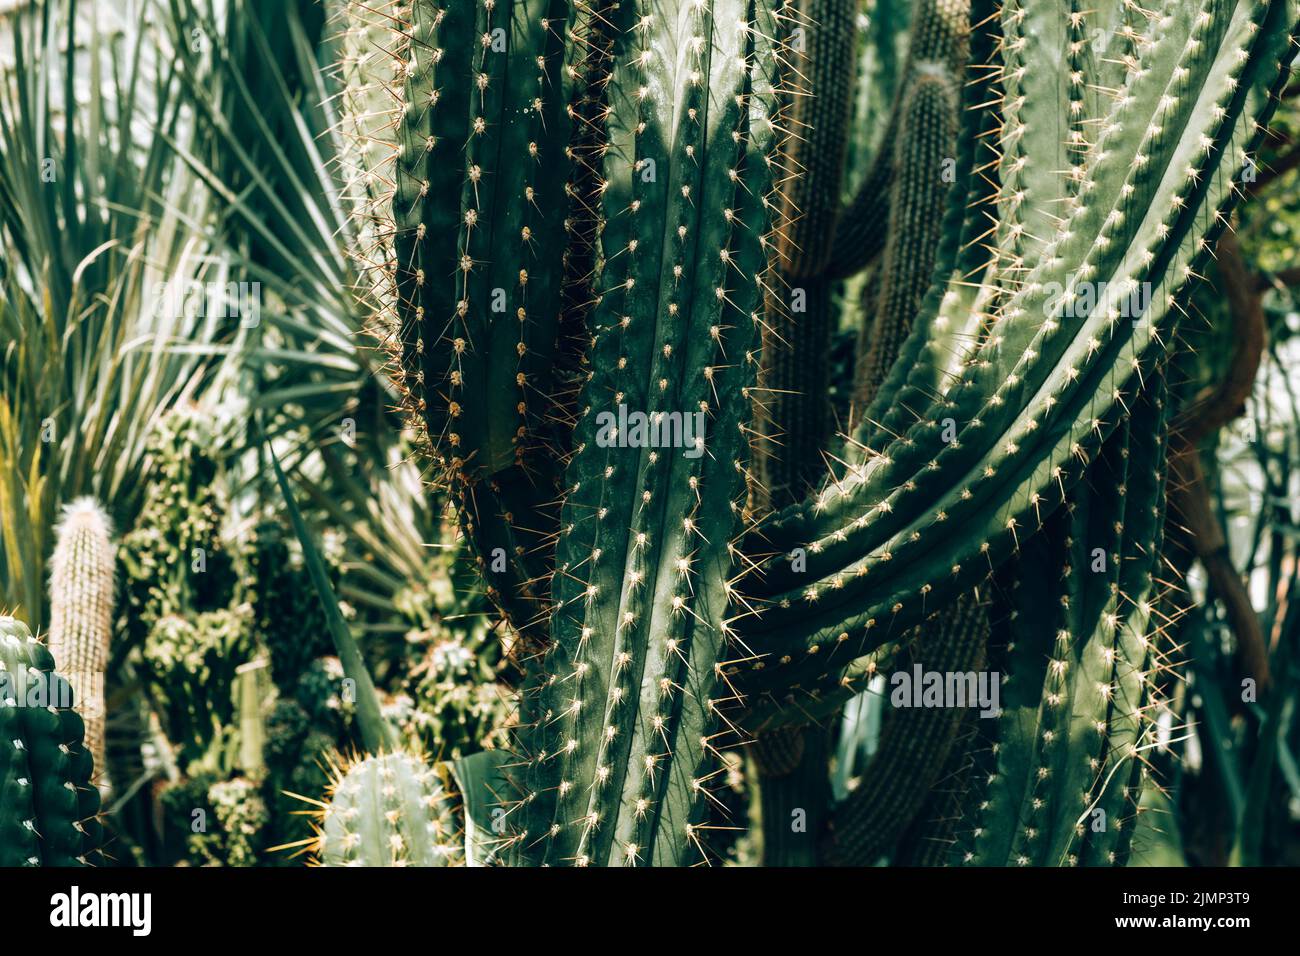 Tall cacti, Cereus repandus, the Peruvian apple cactus, also known as giant club cactus, hedge cactus, cadushi, and kayush. Stock Photo